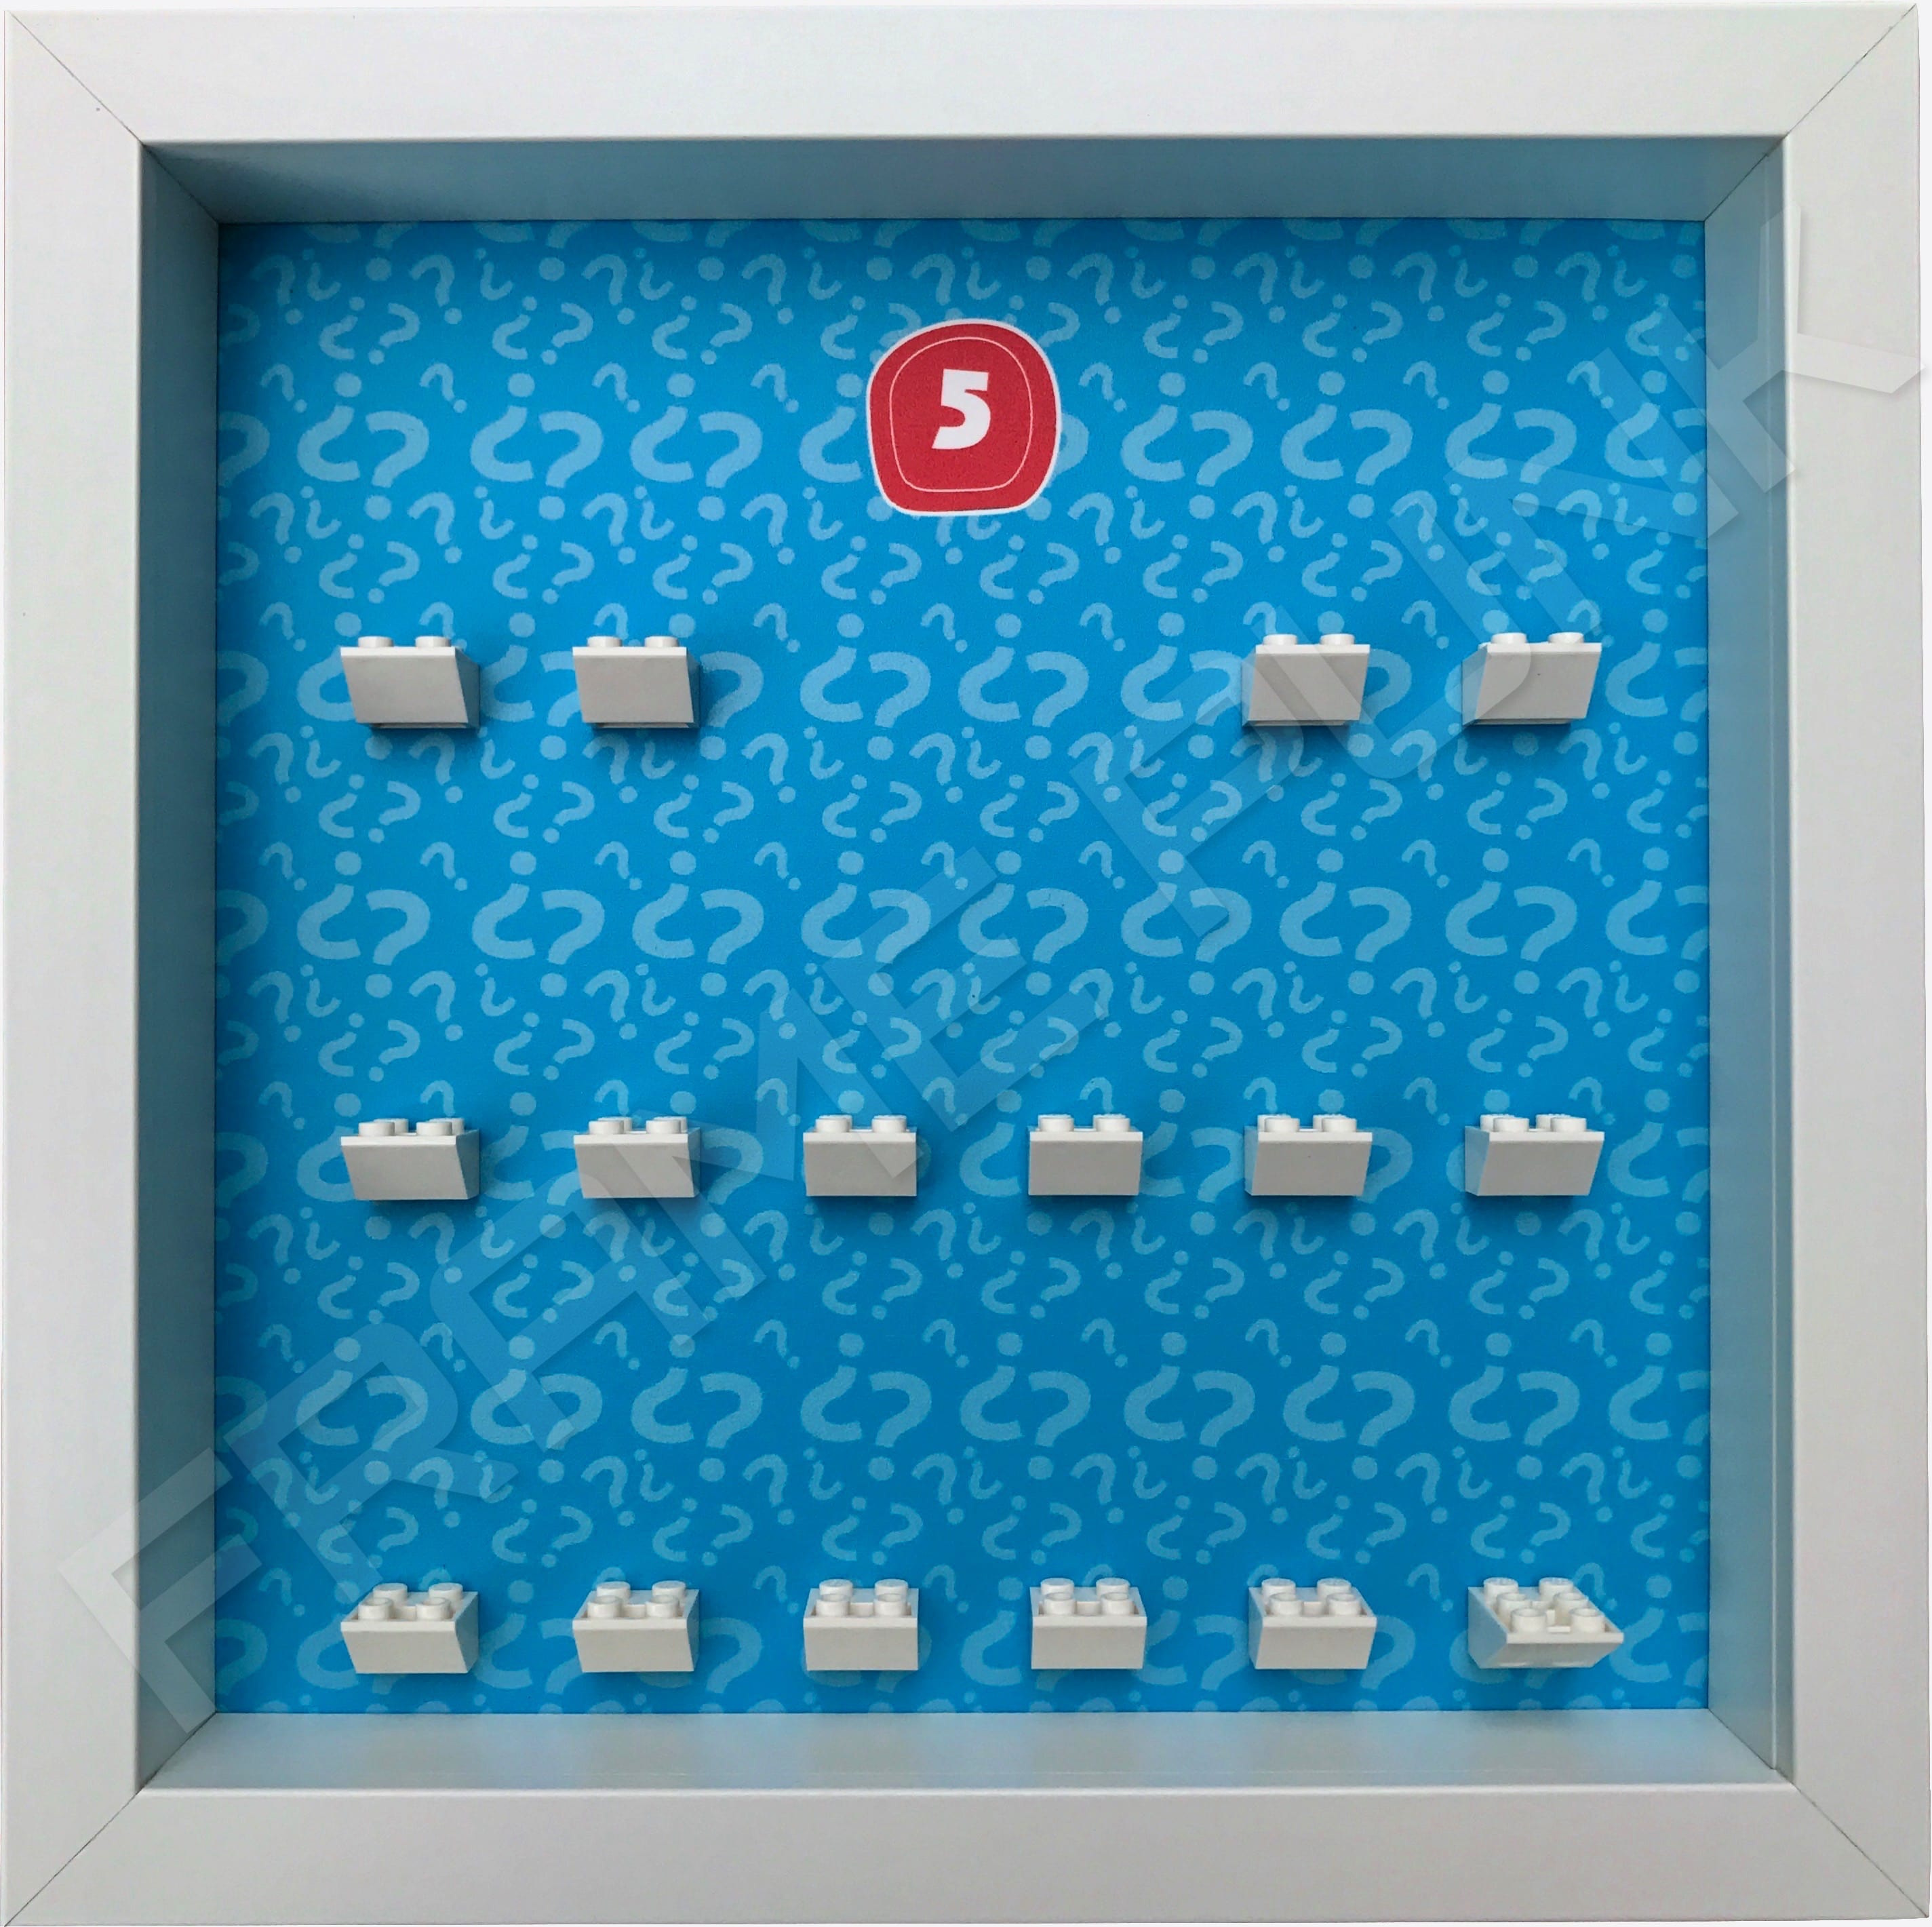 Lego minifigures series 5 display frame